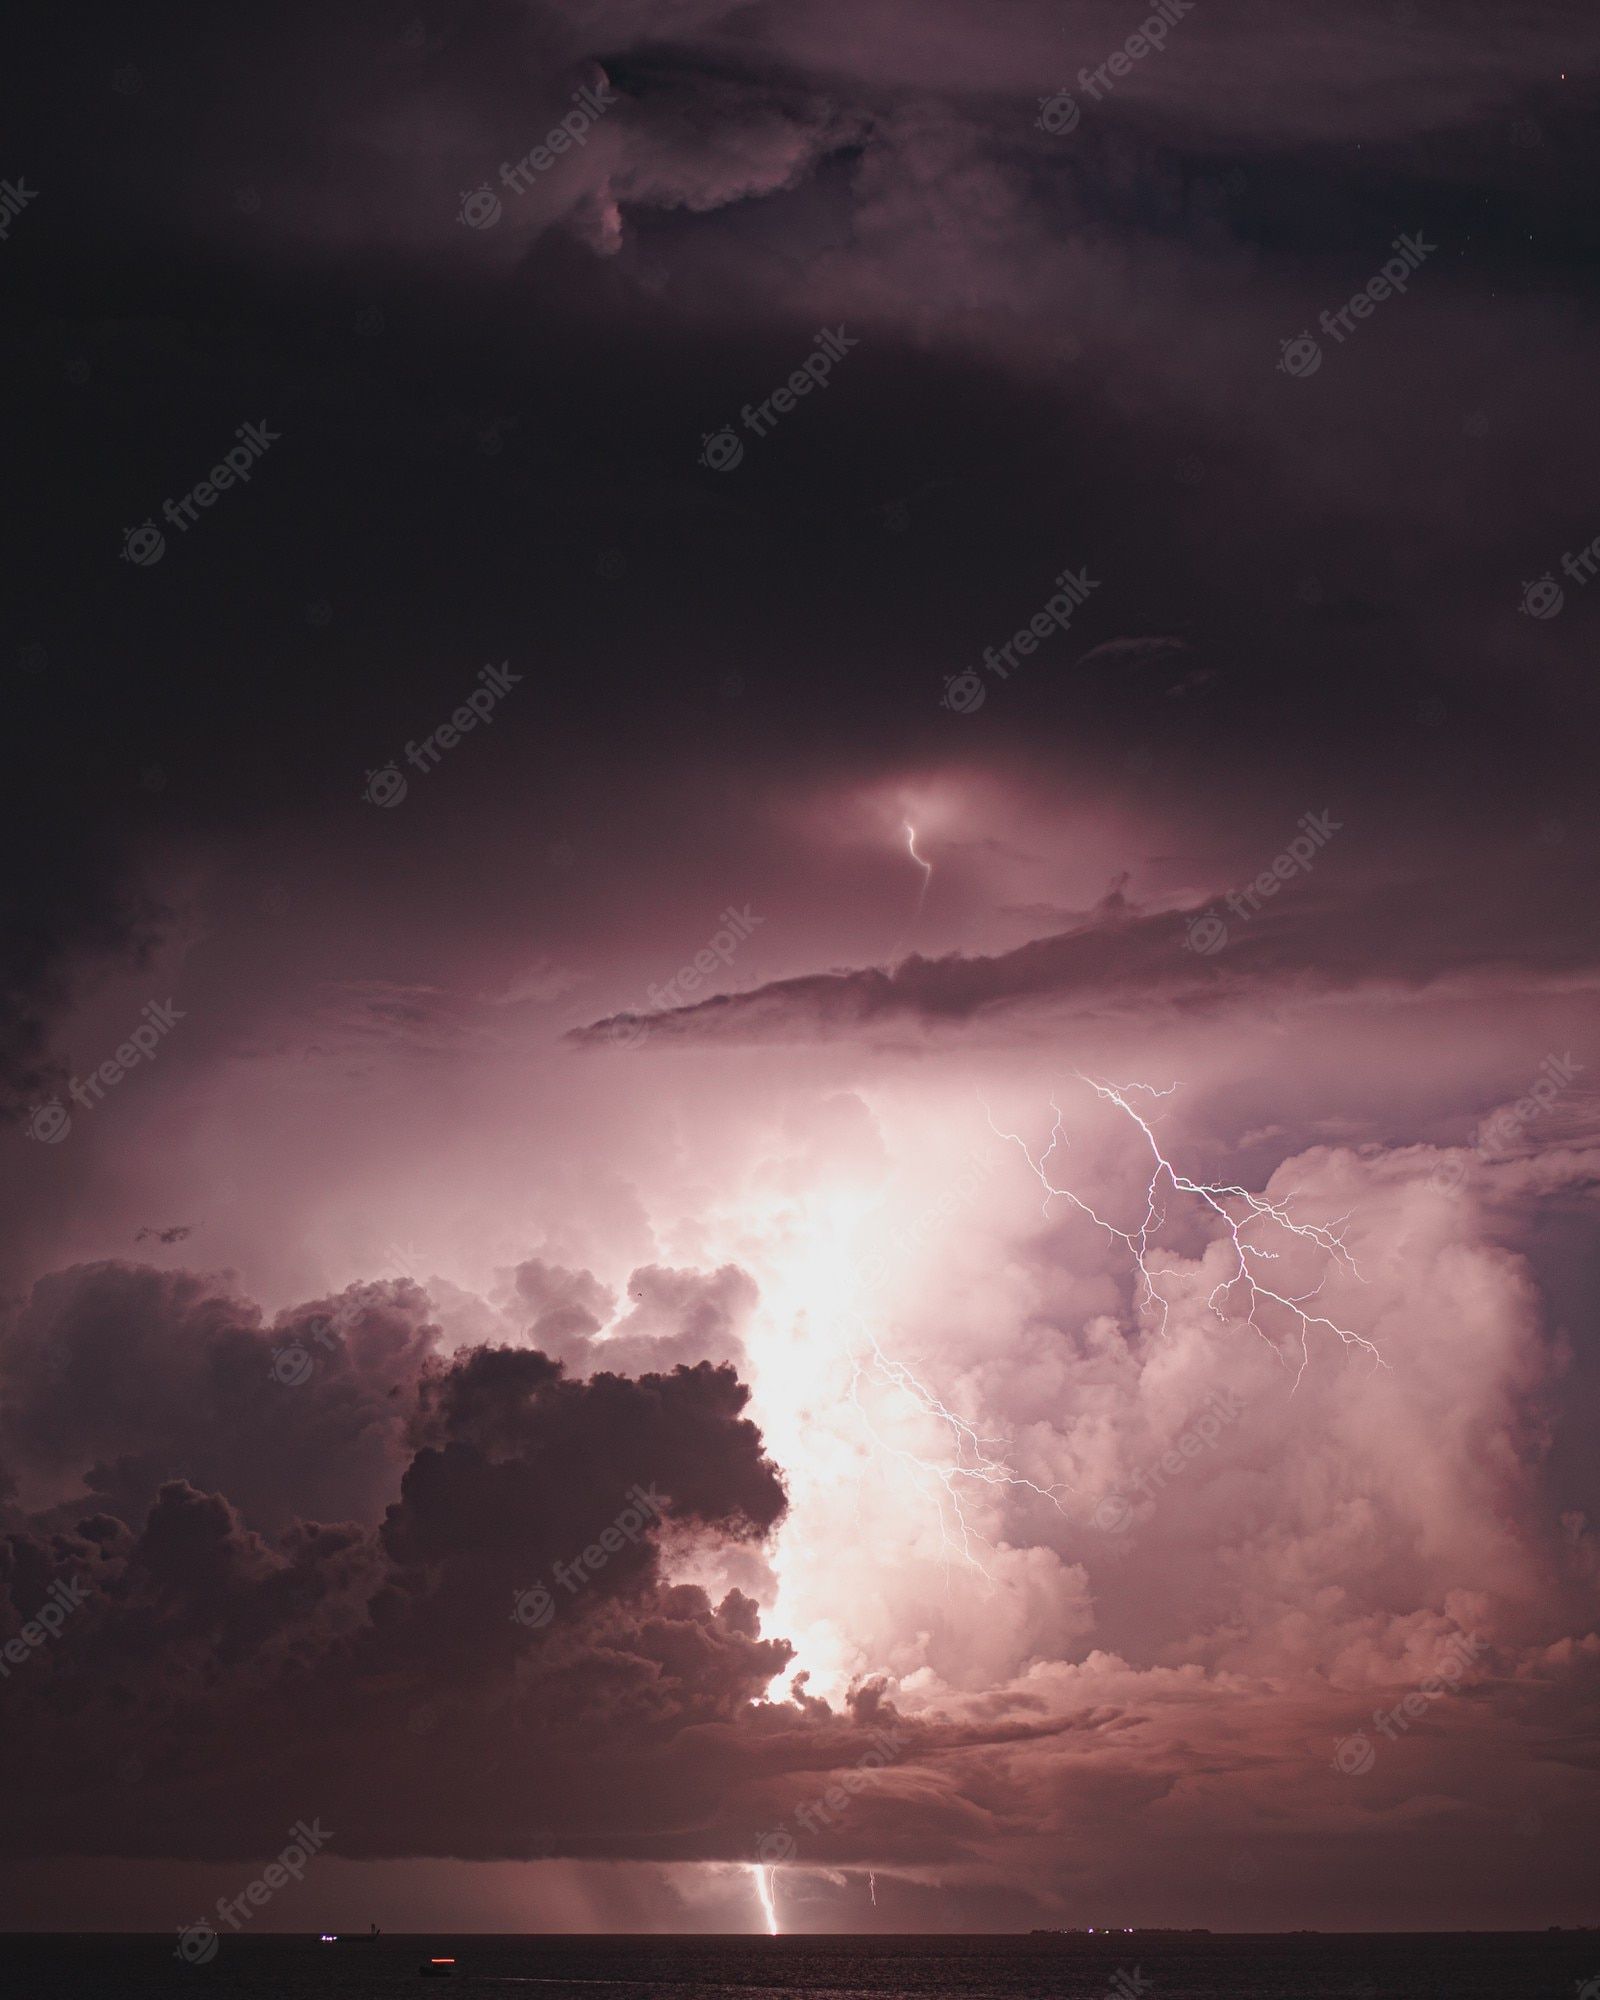 Lightning striking through the clouds over the ocean - Lightning